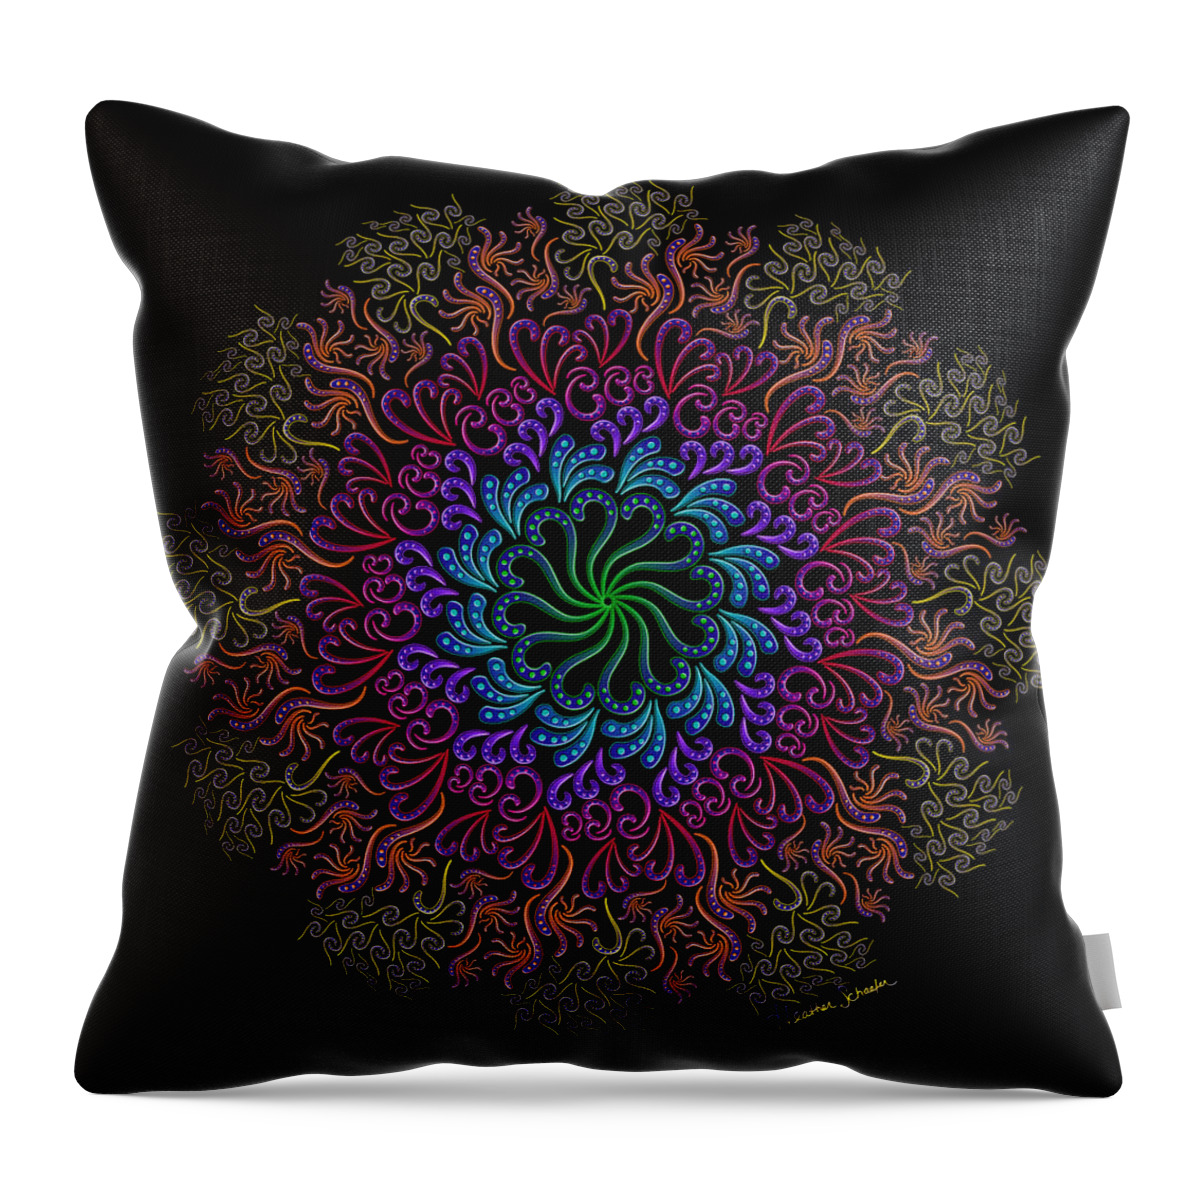 Artsytoo Throw Pillow featuring the digital art Splendid Spotted Swirls by Heather Schaefer